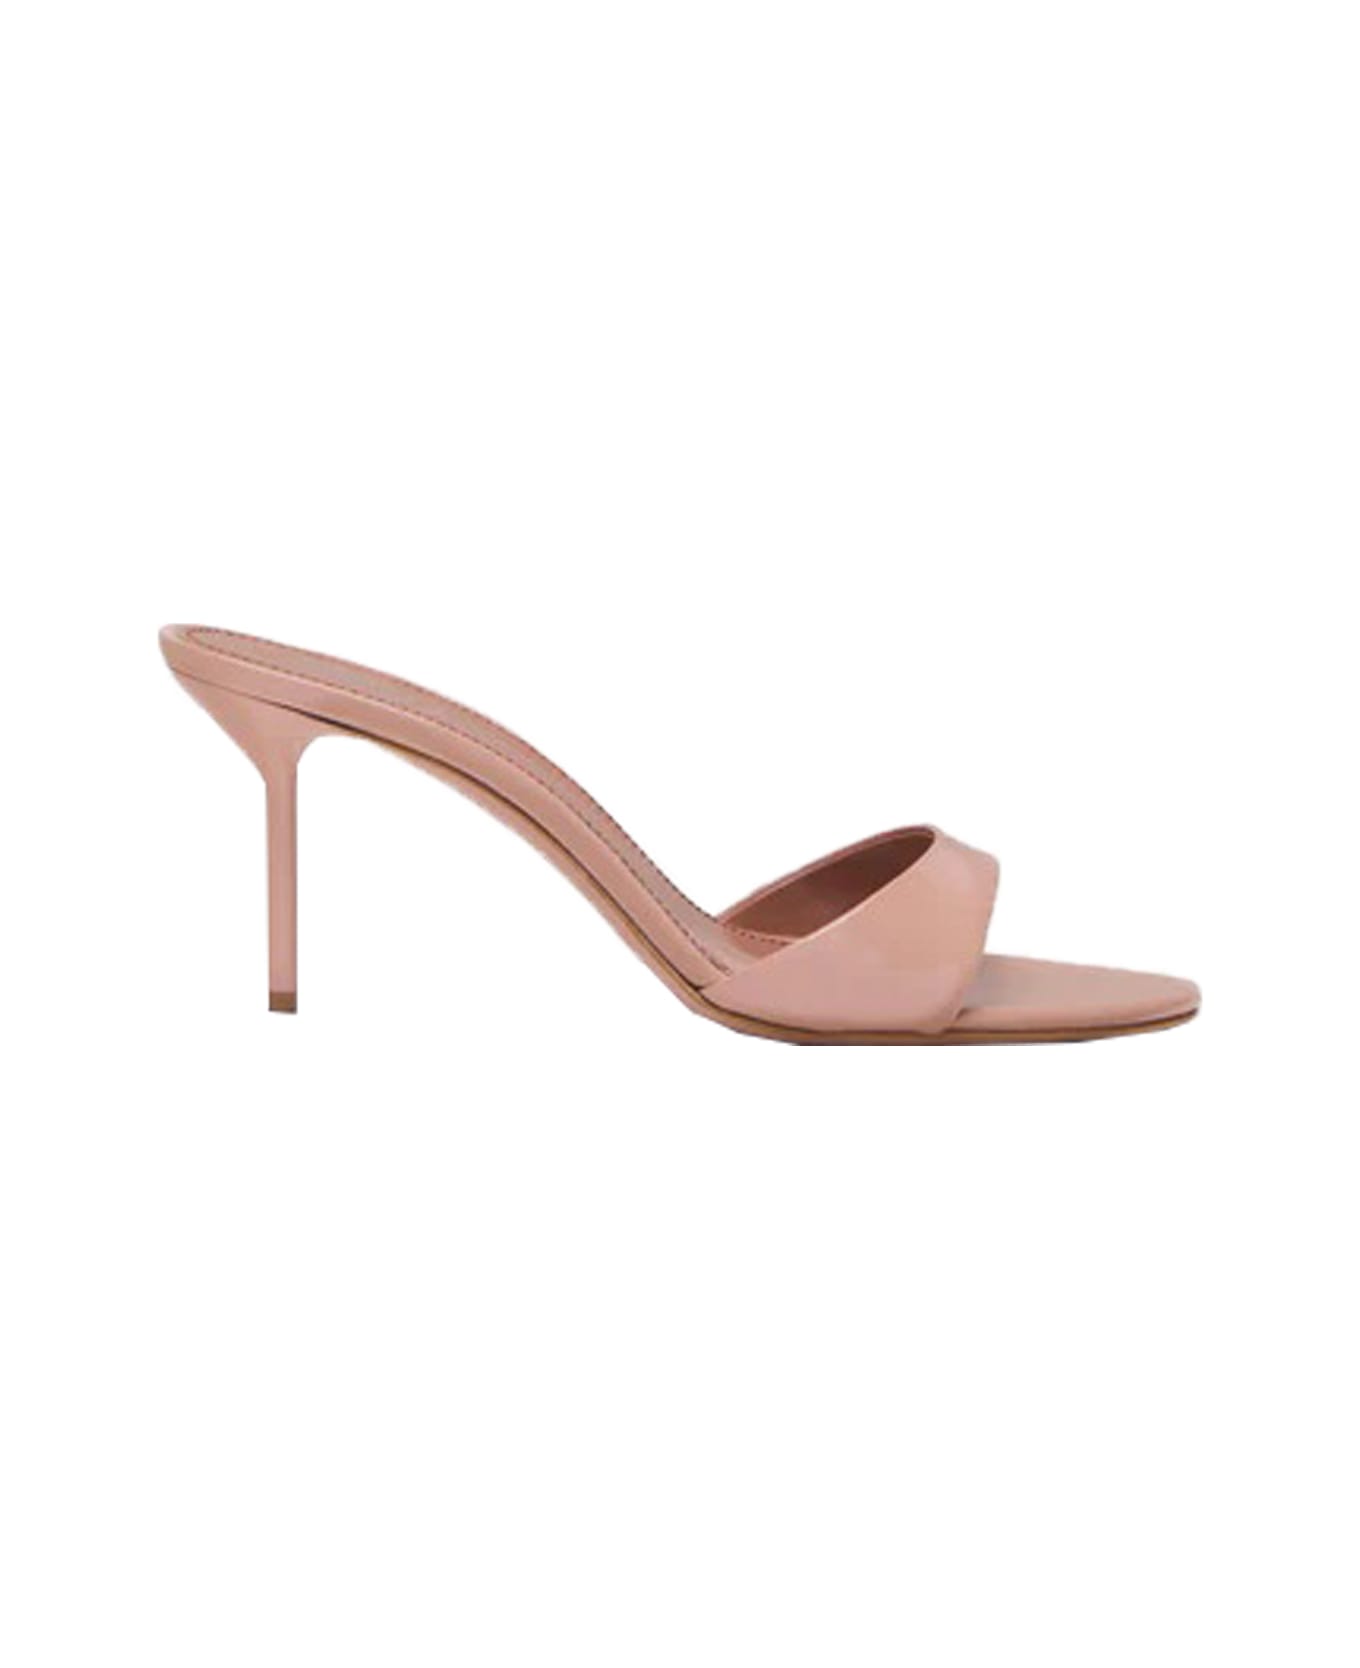 Paris Texas Heeled Sandals - Pink サンダル